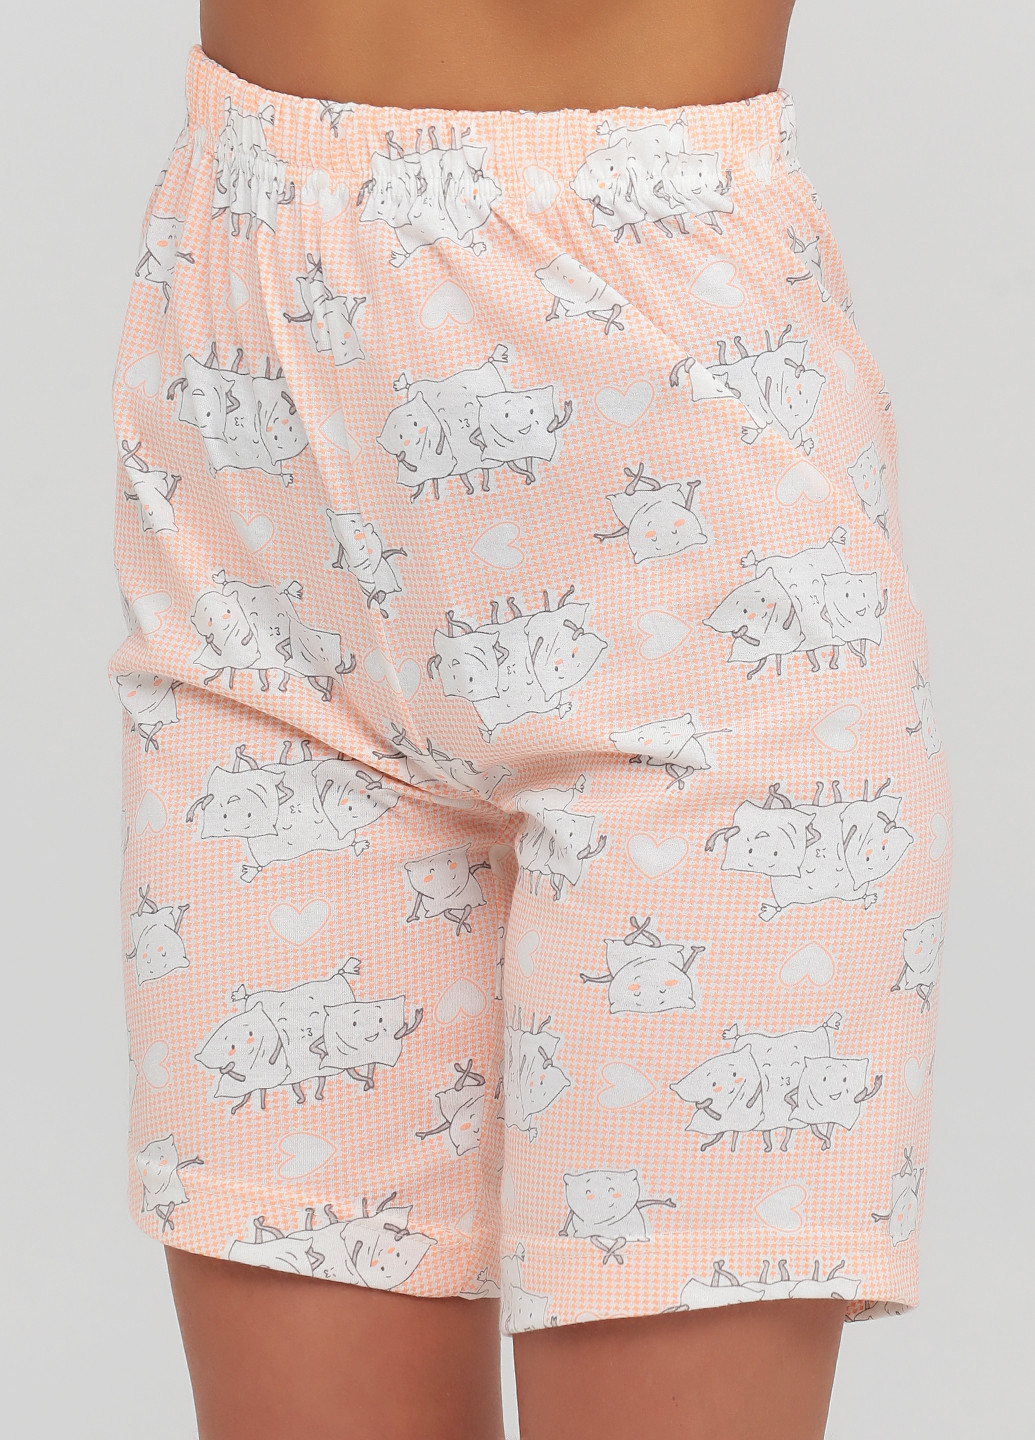 Персиковая всесезон пижама (майка, шорты) майка + шорты Marilynmod